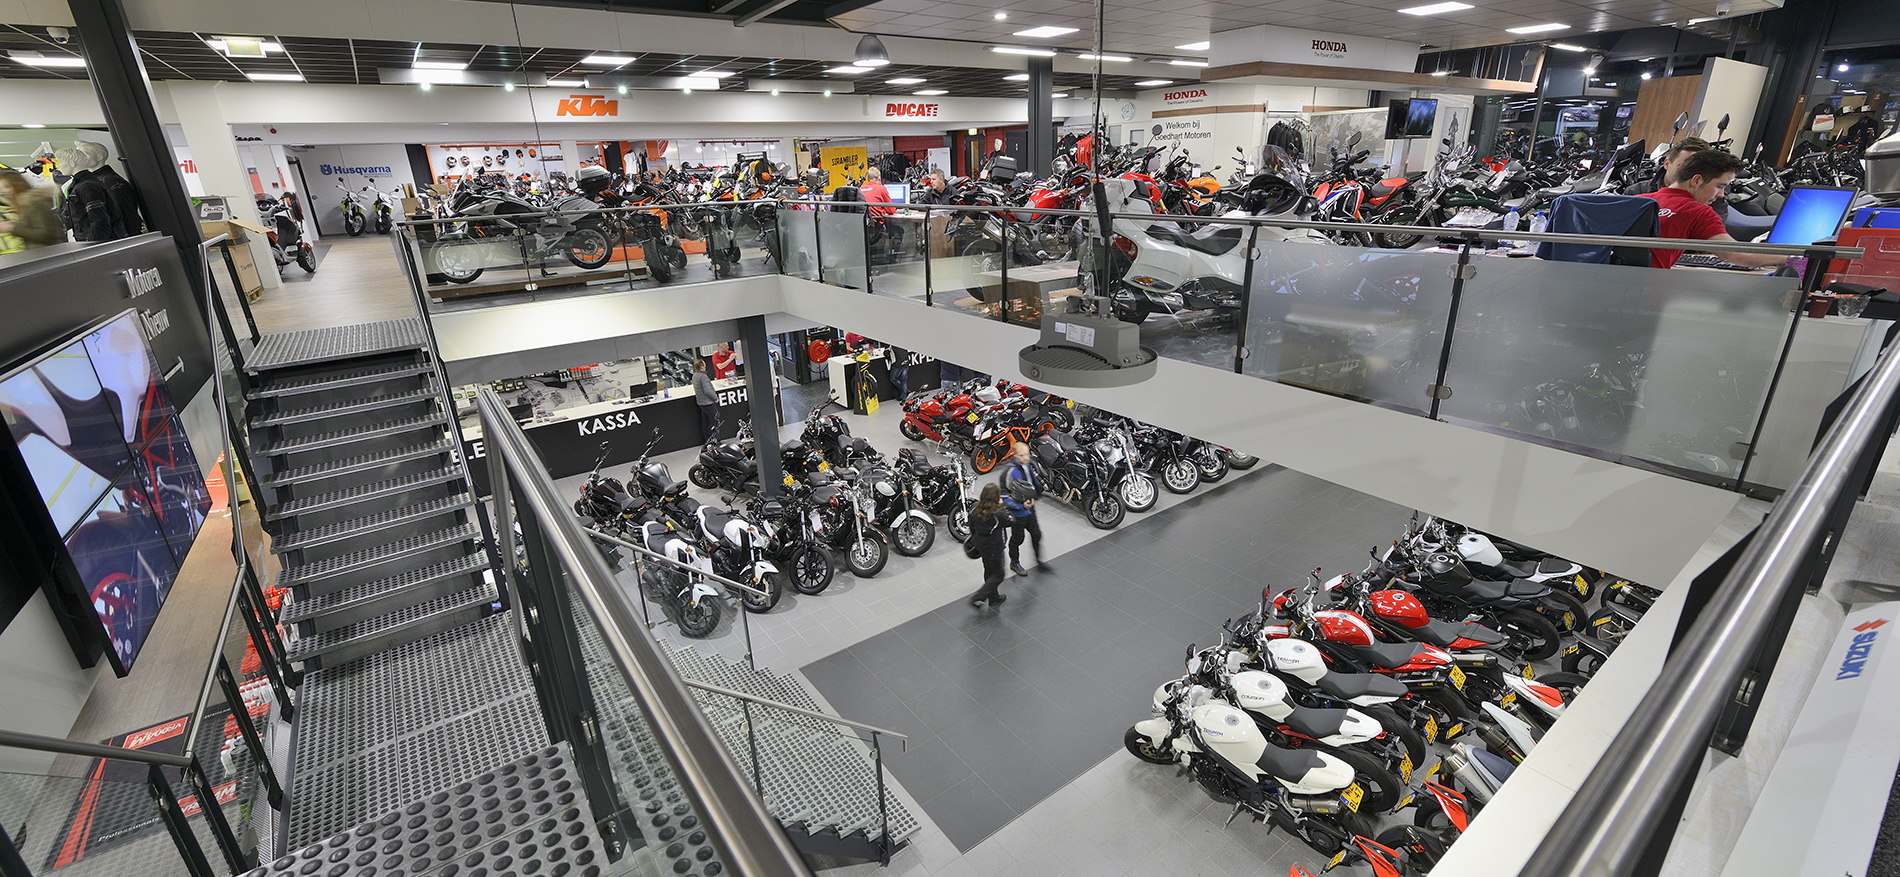 Goedhart Motorbikes: interior design by WSB - Sport